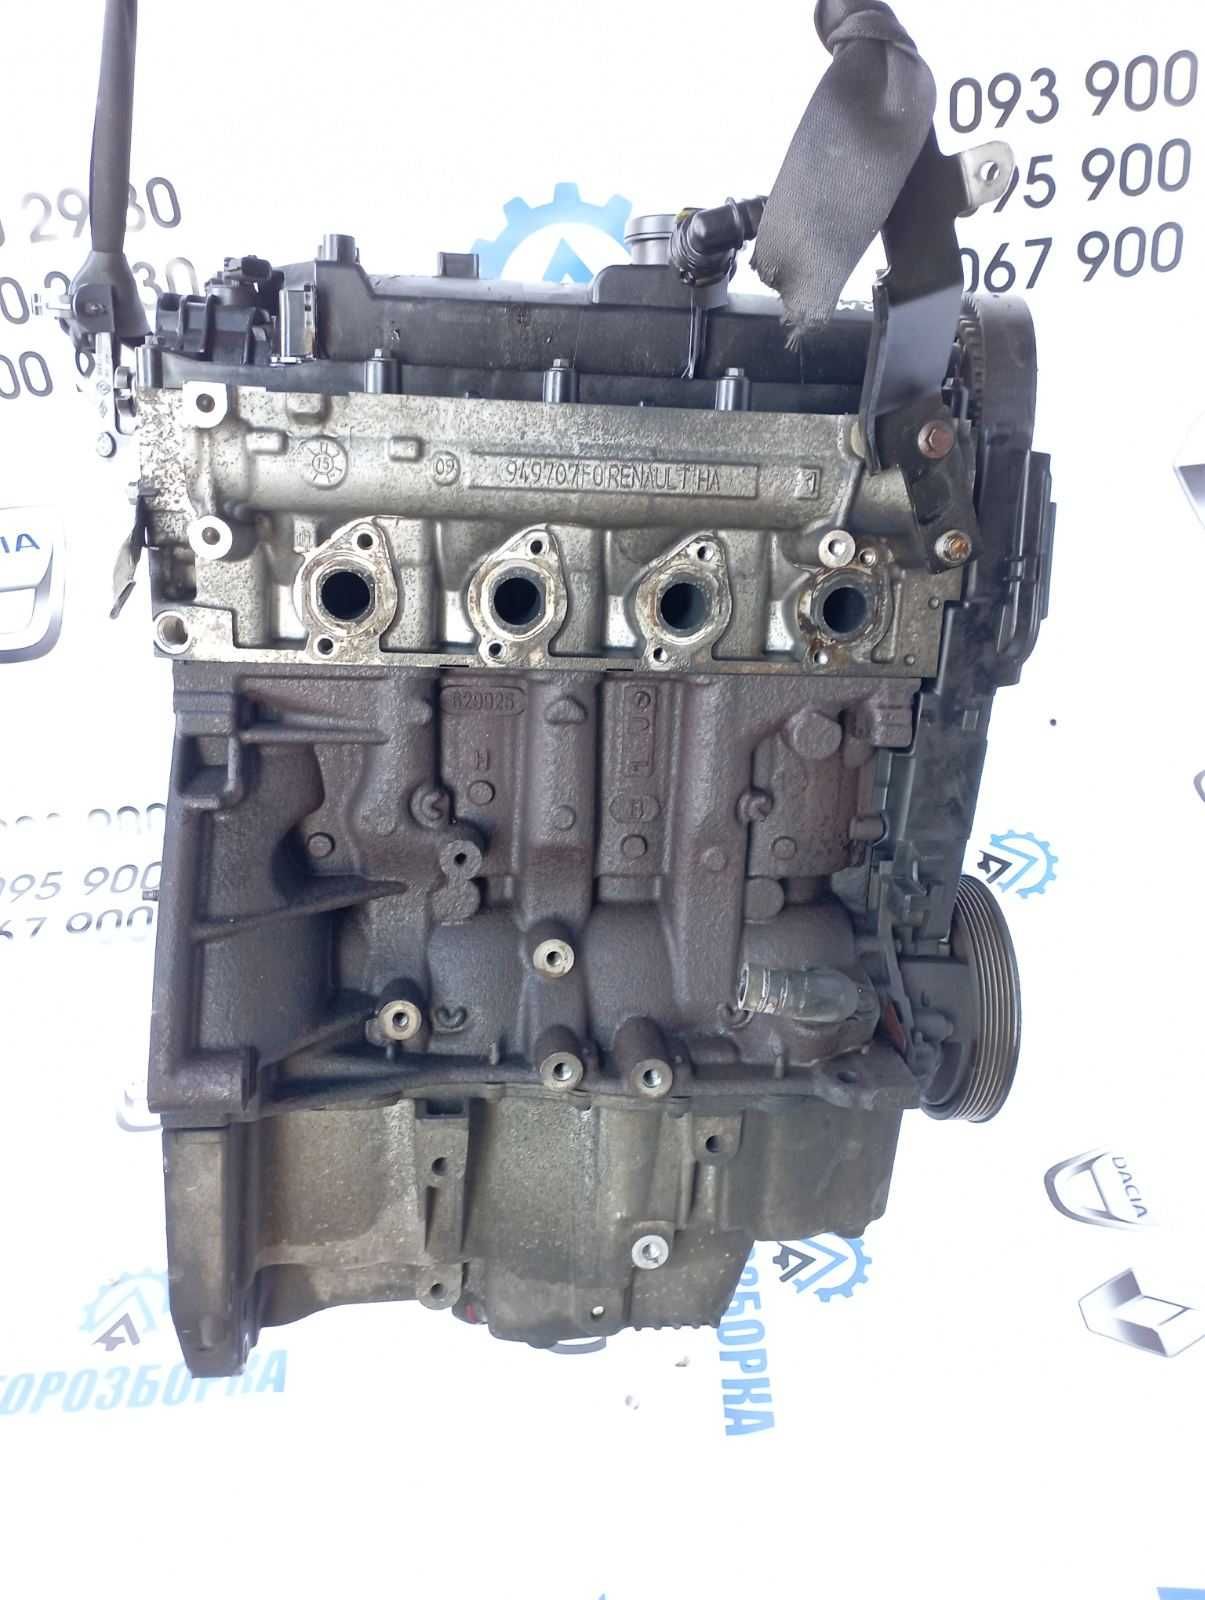 Двигатель K9K 834 (1,5 DCI 8V 66КВт) Renault MEGANE 3 2009-2013